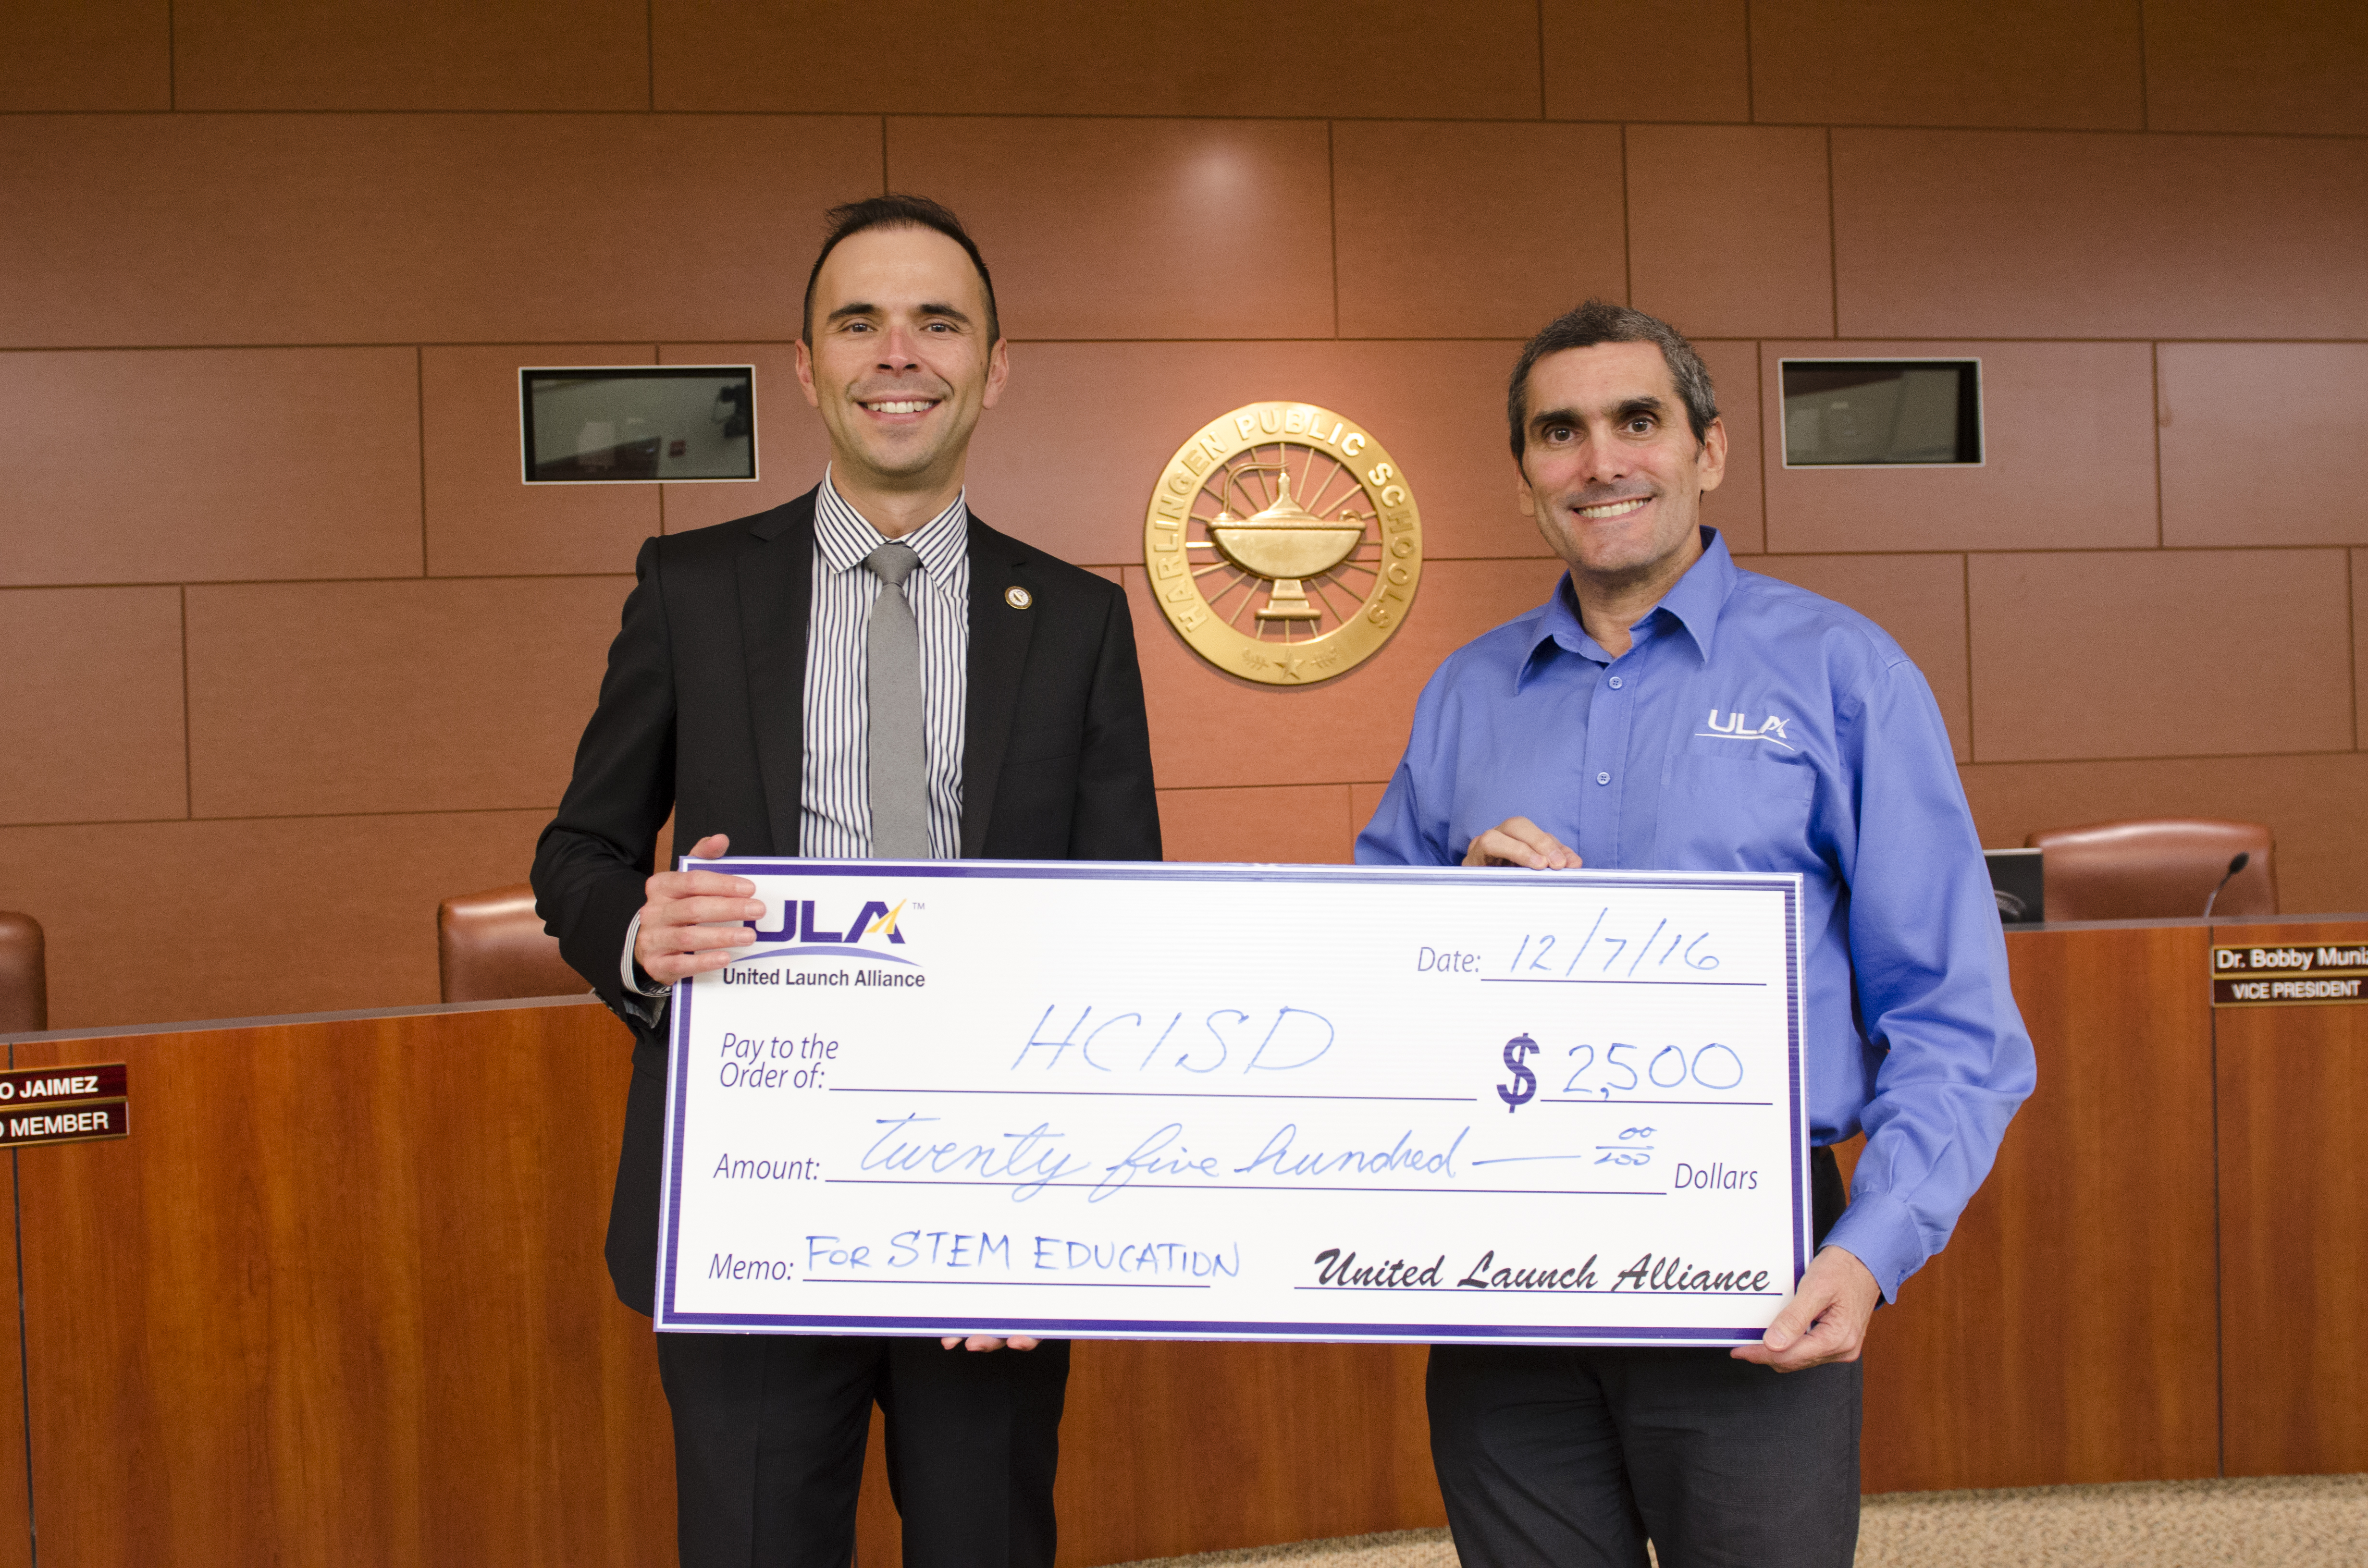 ULA makes $2,500 contribution to help fund STEM programs